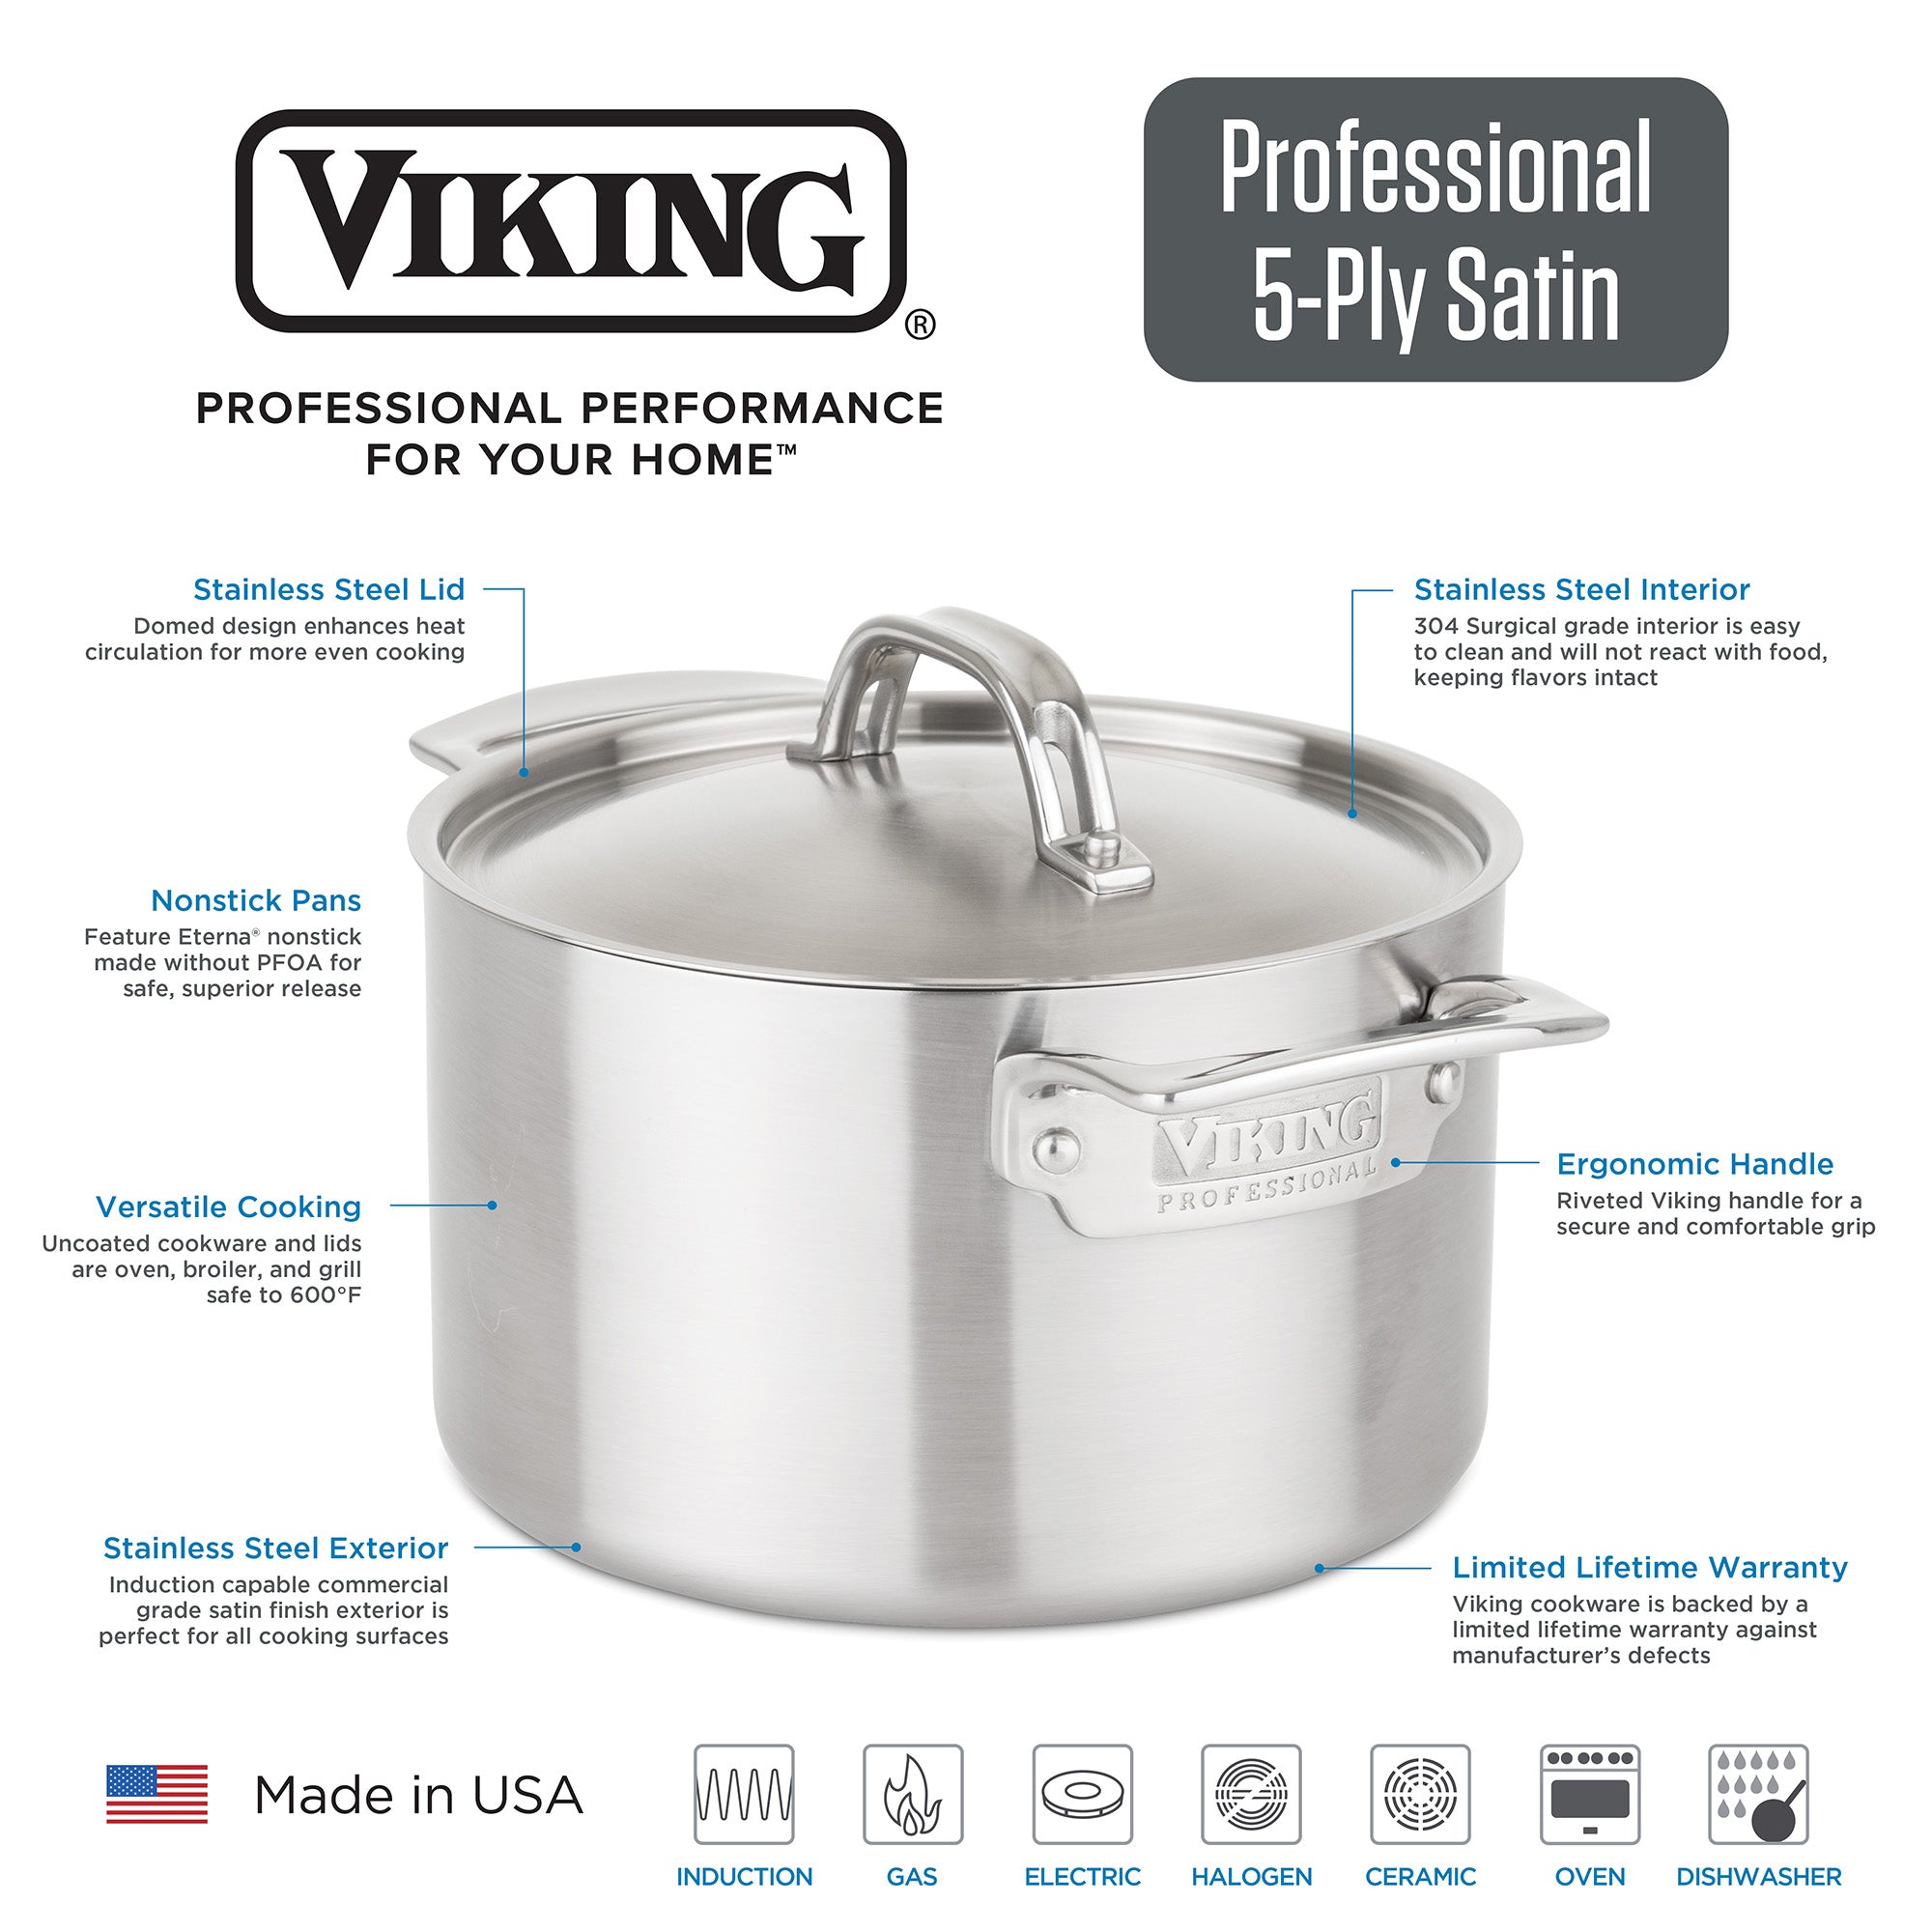 Viking Professional 5-Ply 3.4 qt. Saute Pan